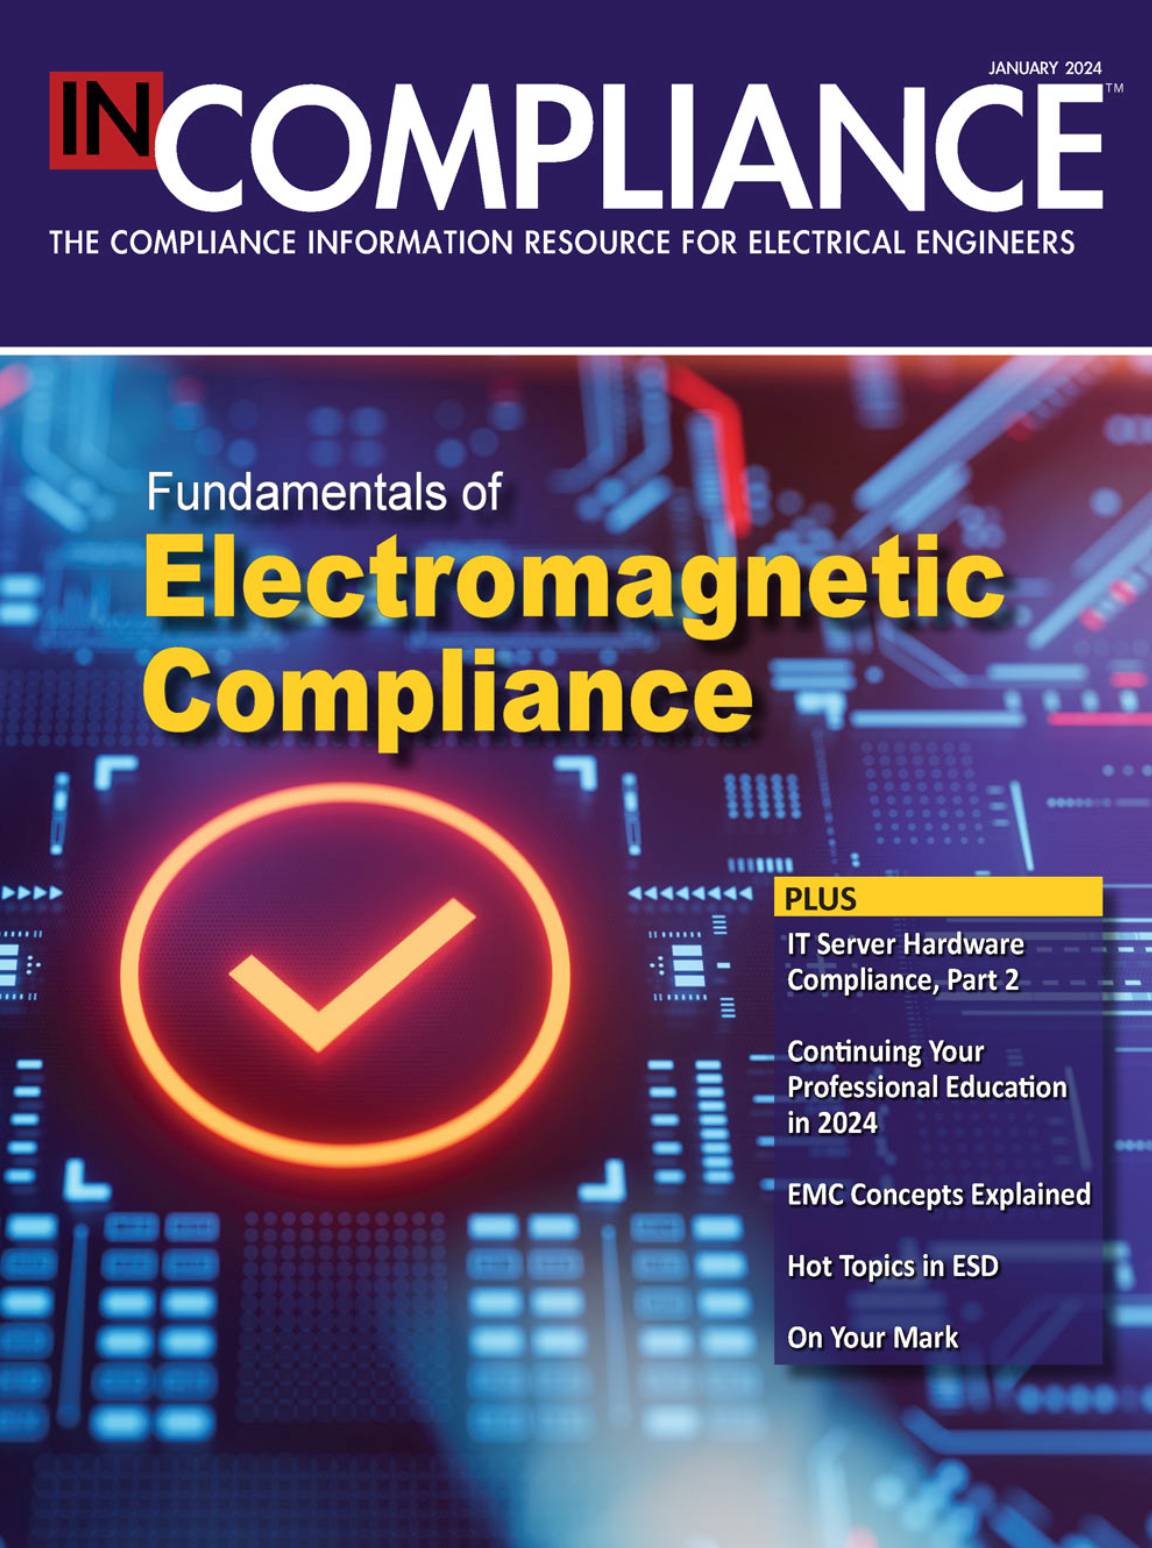 InCompliance Magazine cover